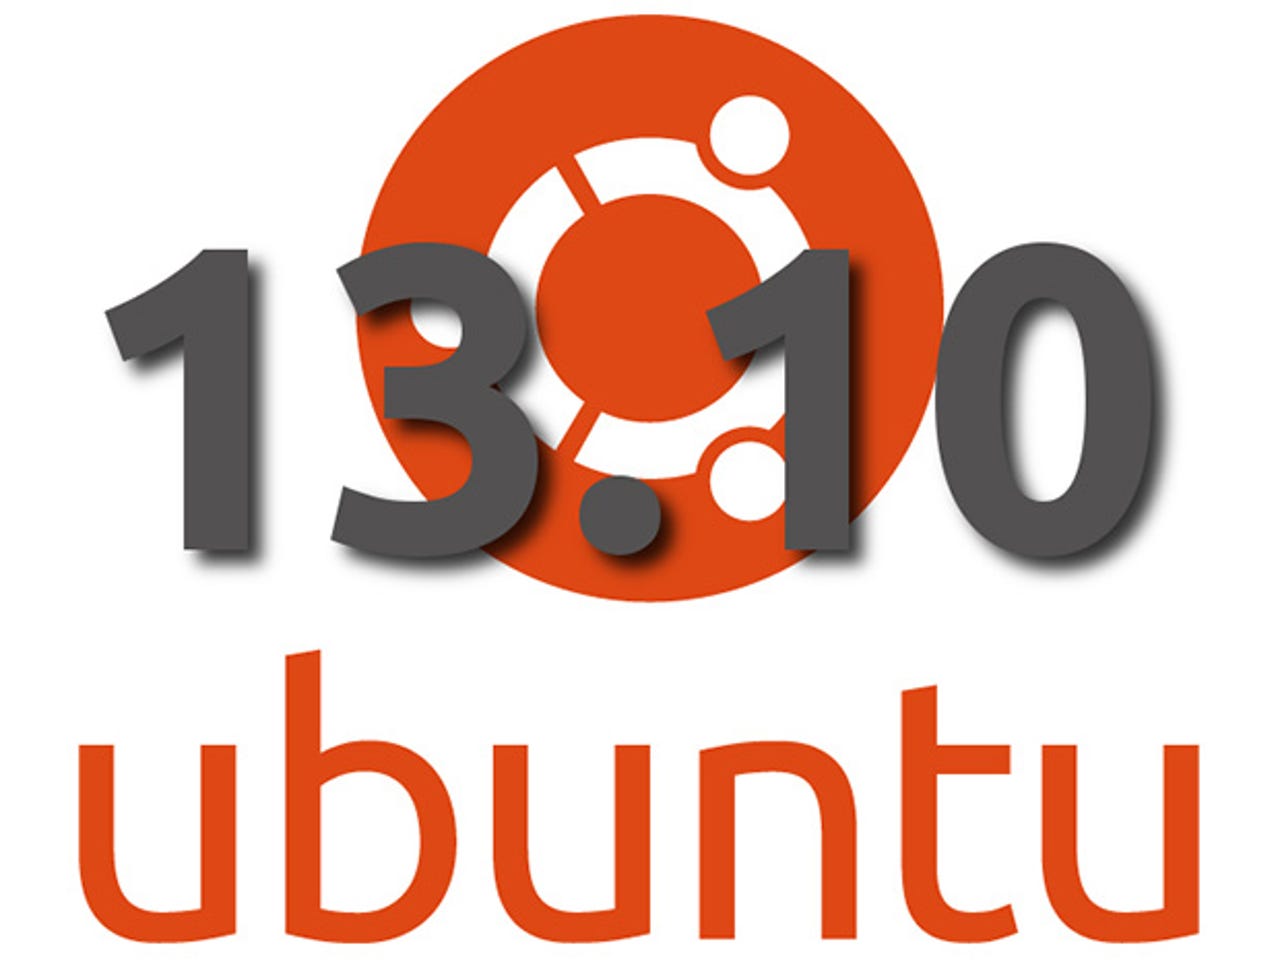 ubuntu-1310-final-thumb.jpg